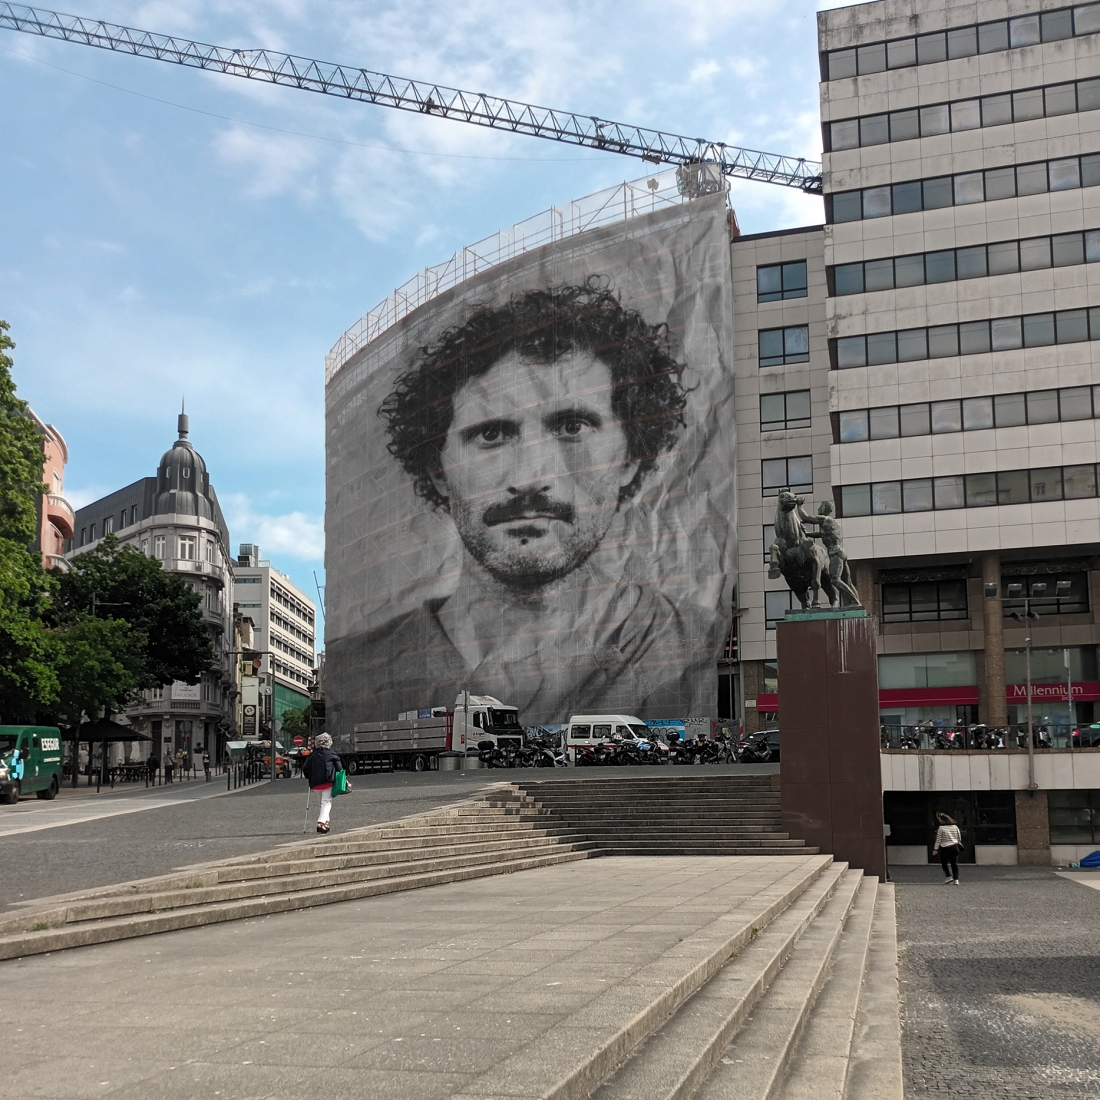 Colour photo shows the Praça D. João I, in front of Rivoli. A large black and white portrait of Nuno Preto covers the façade of a building under construction.